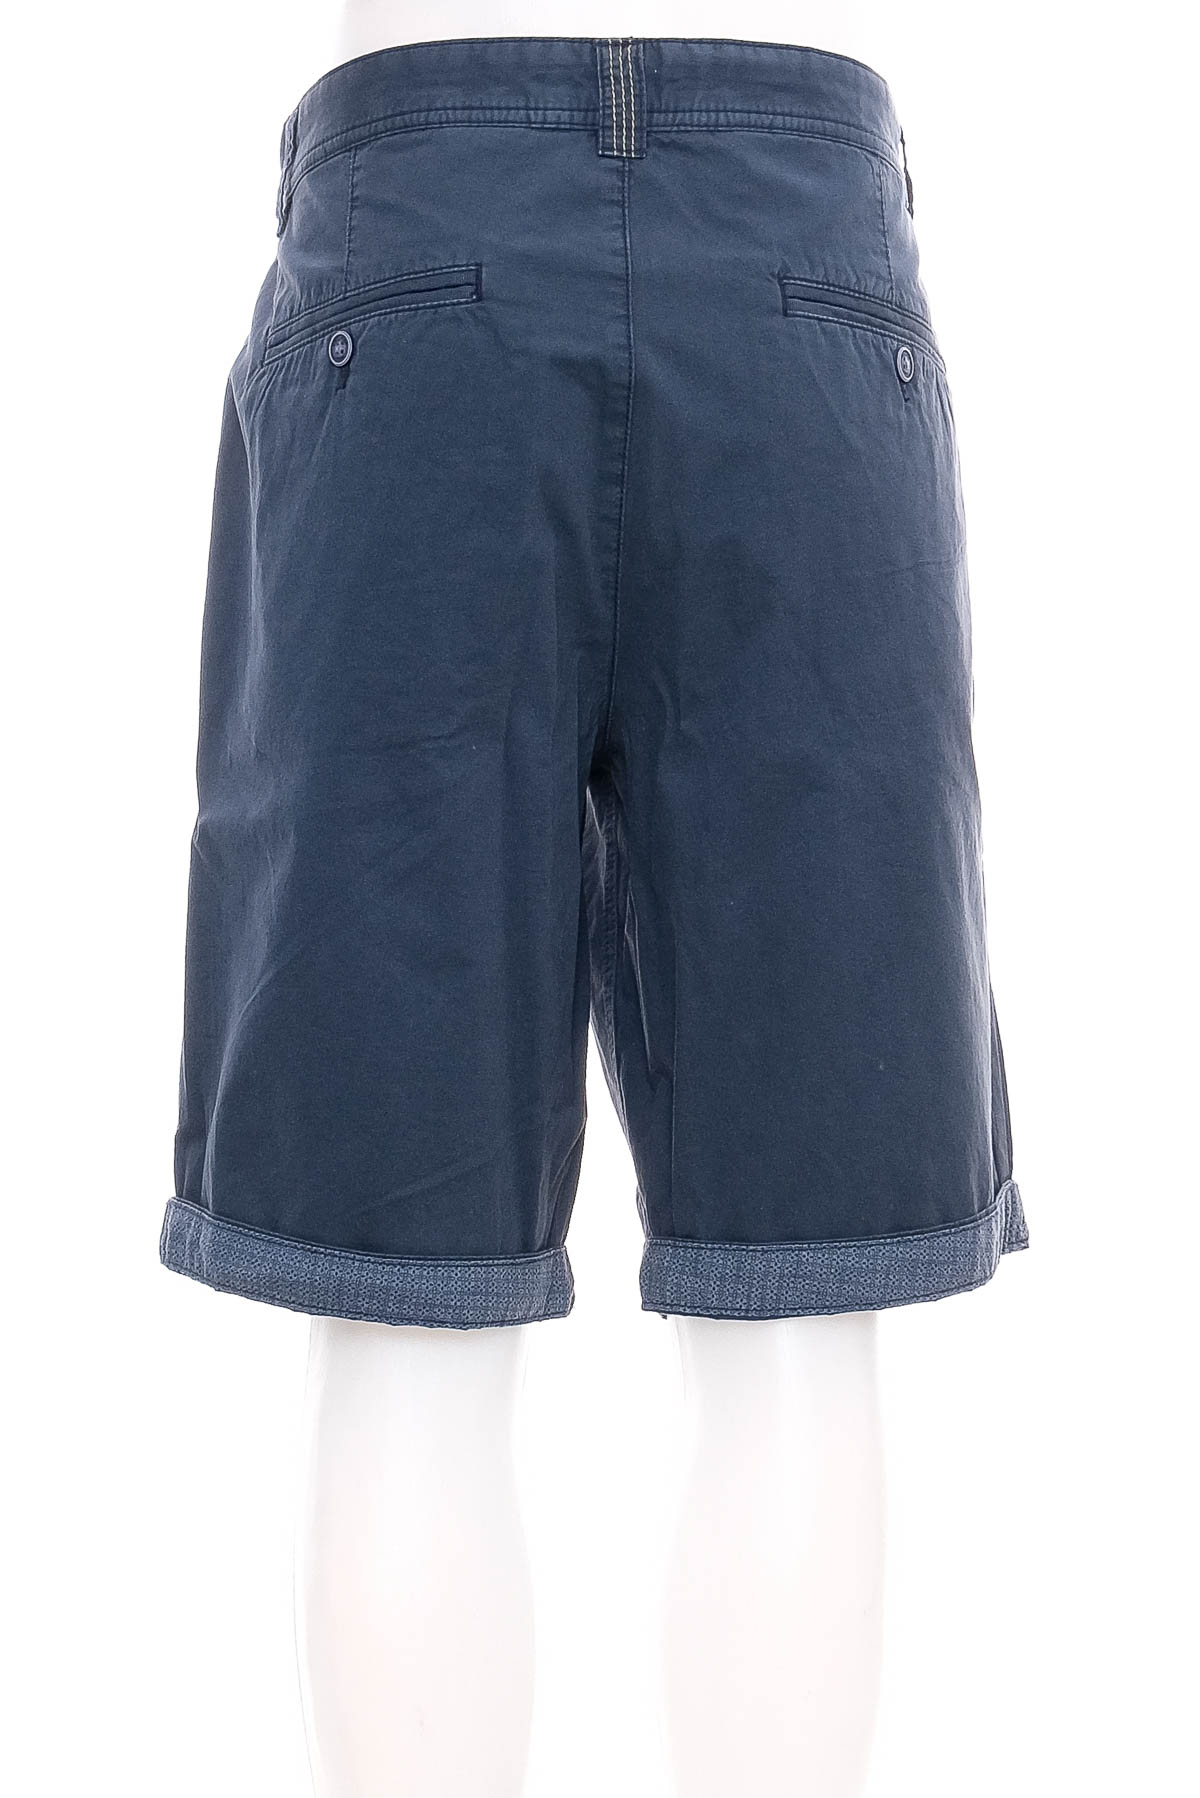 Pantaloni scurți bărbați - Rover & Lakes - 1